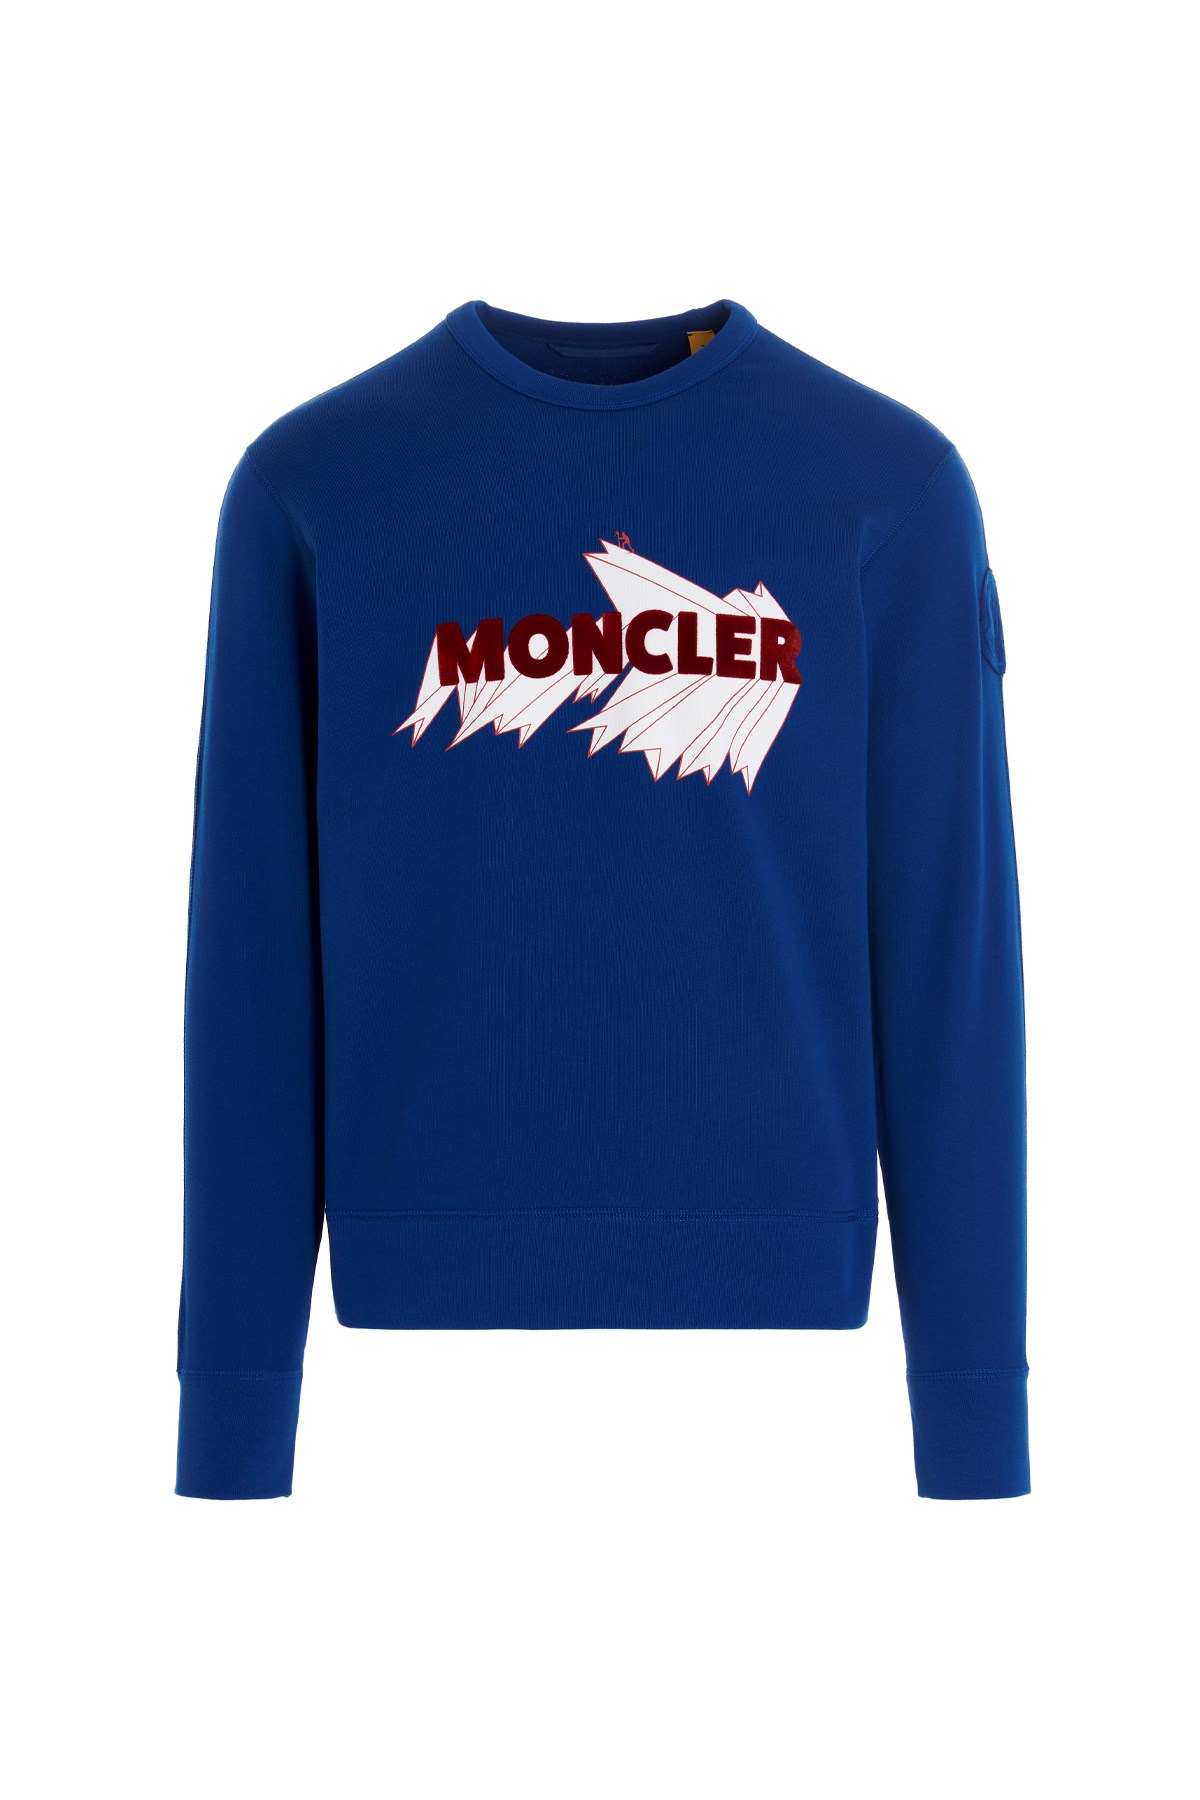 MONCLER GENIUS Sweatshirt Von Moncler Genius X 1952